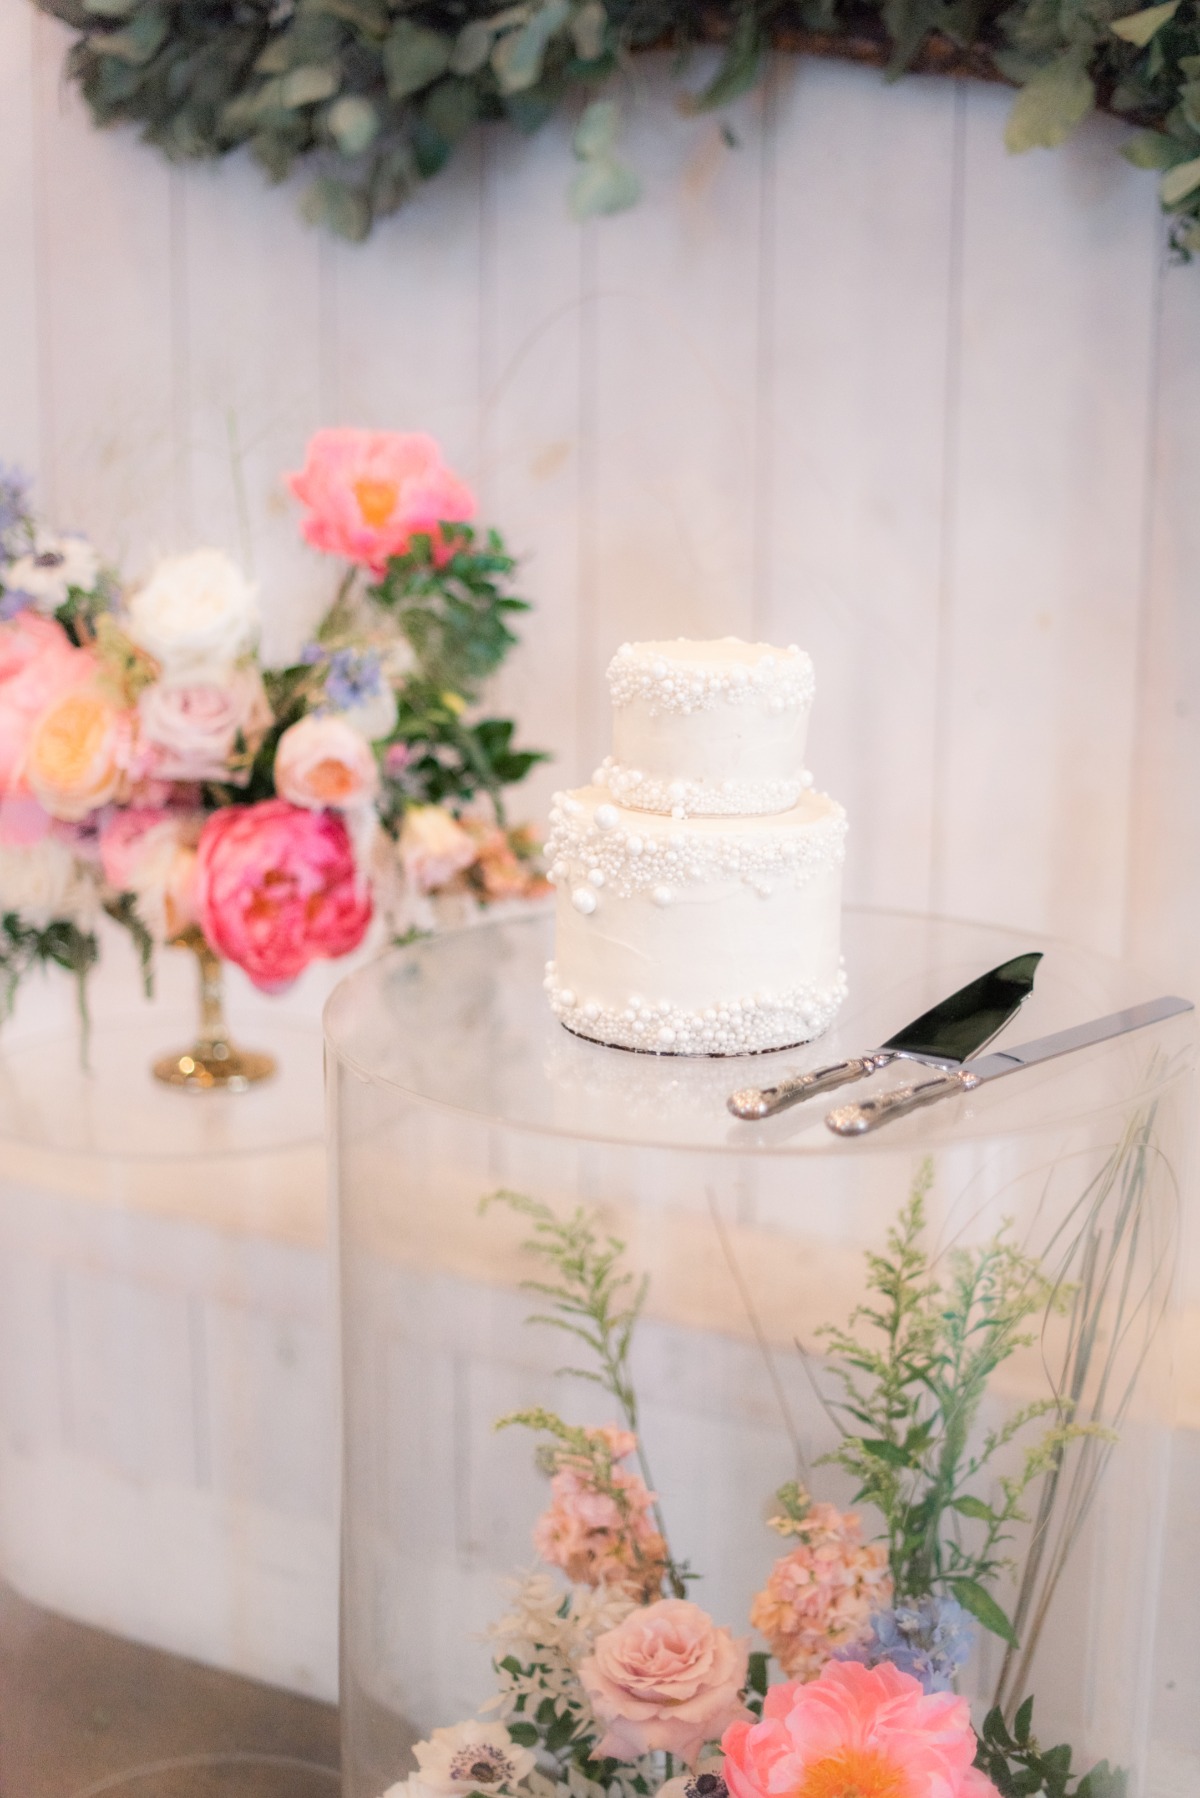 Cute small wedding cake